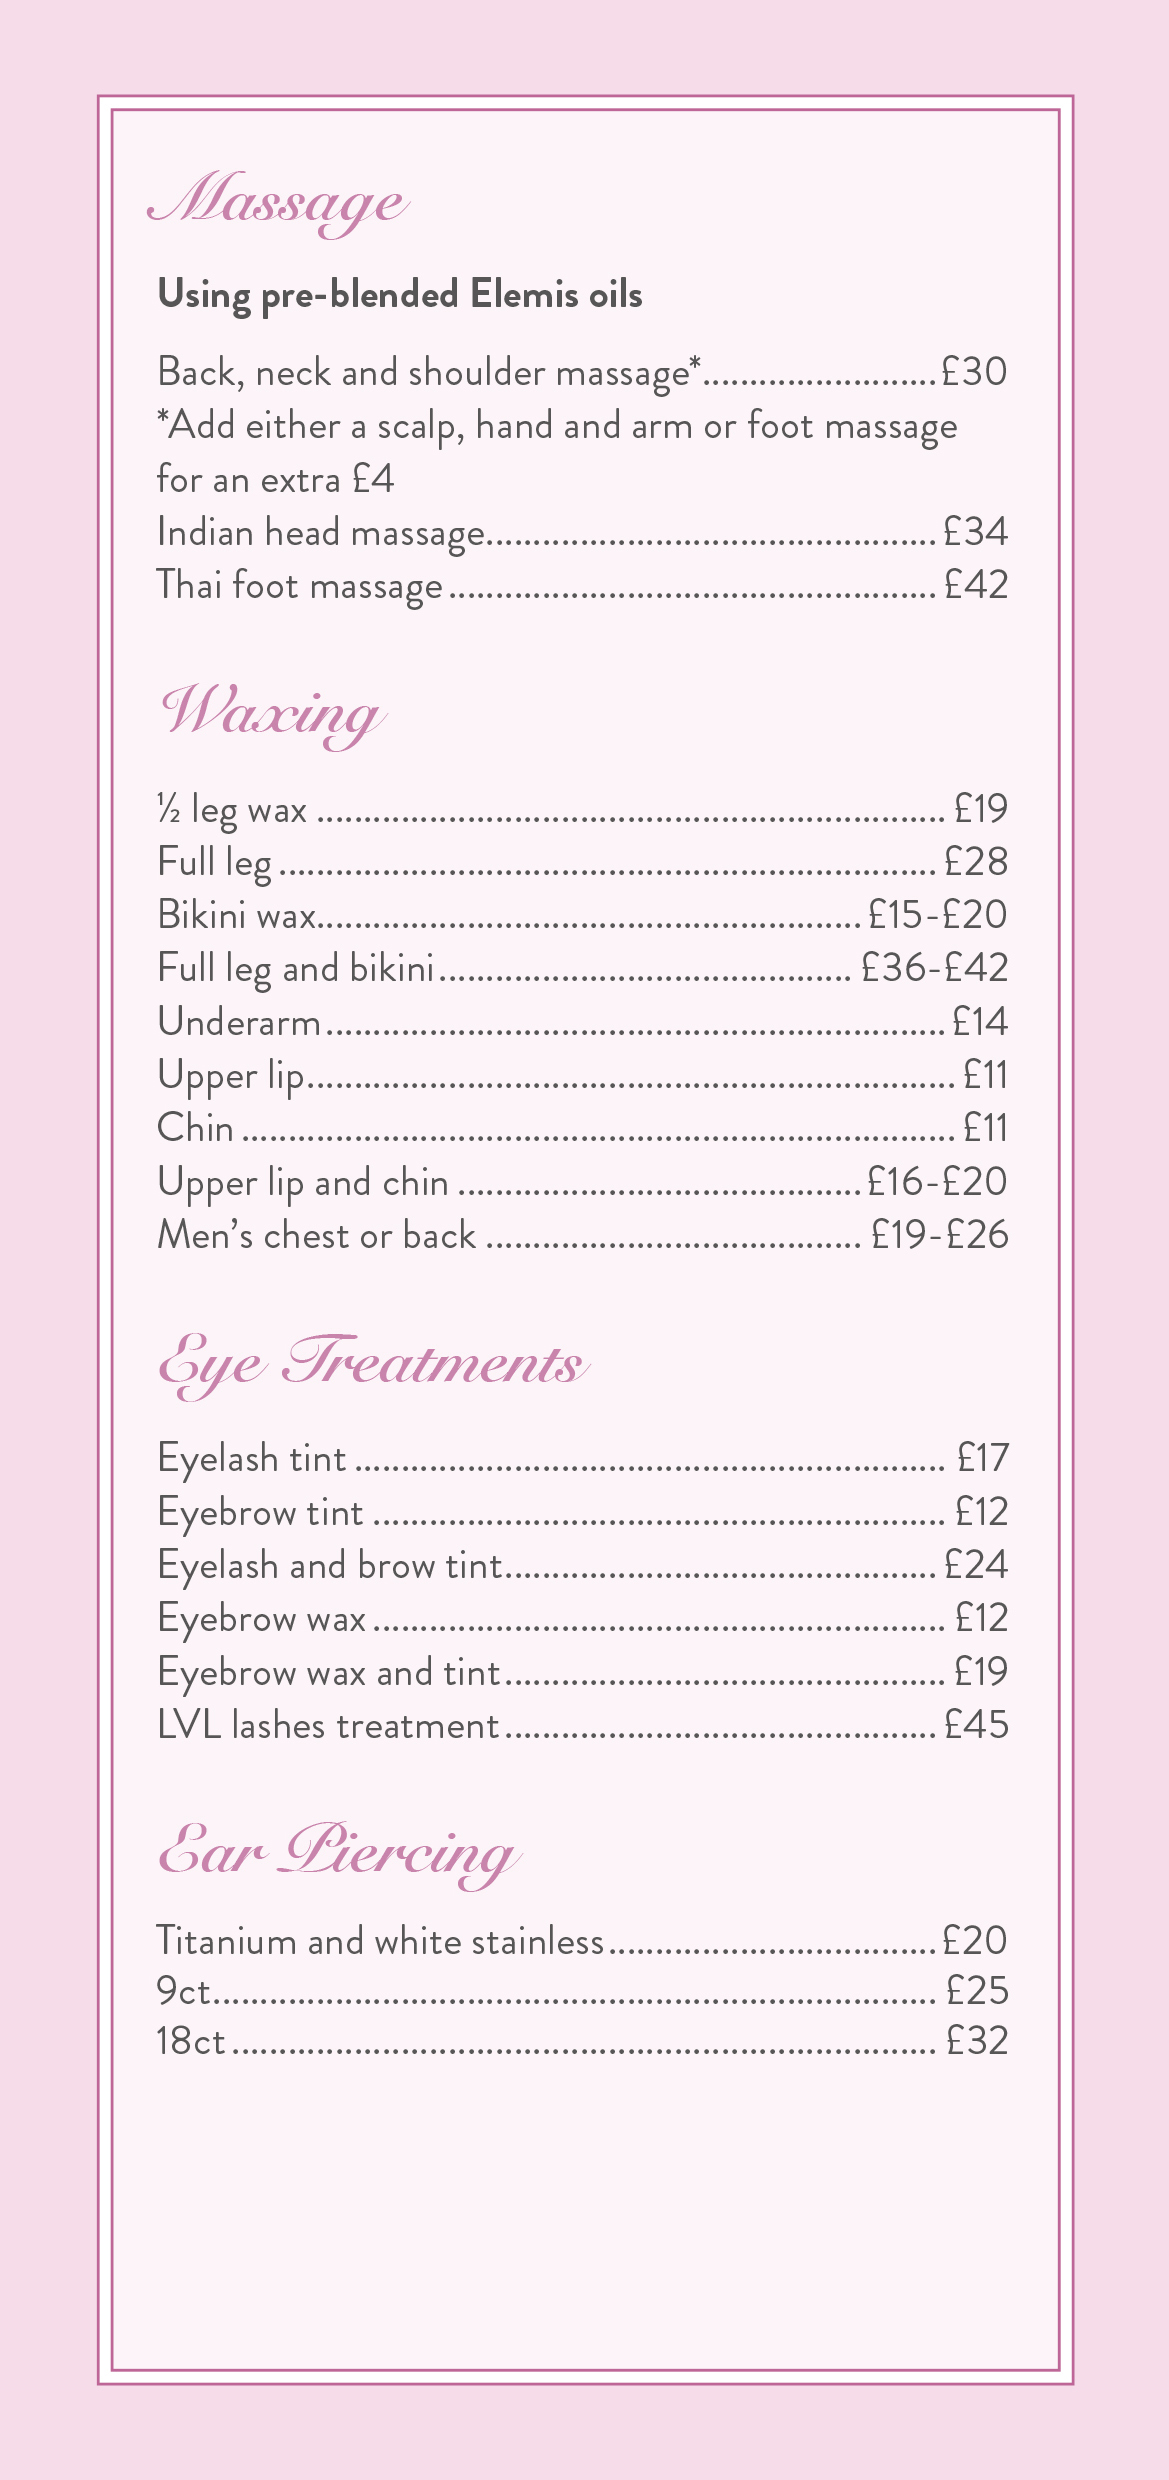 Treatment pricelist page 2
